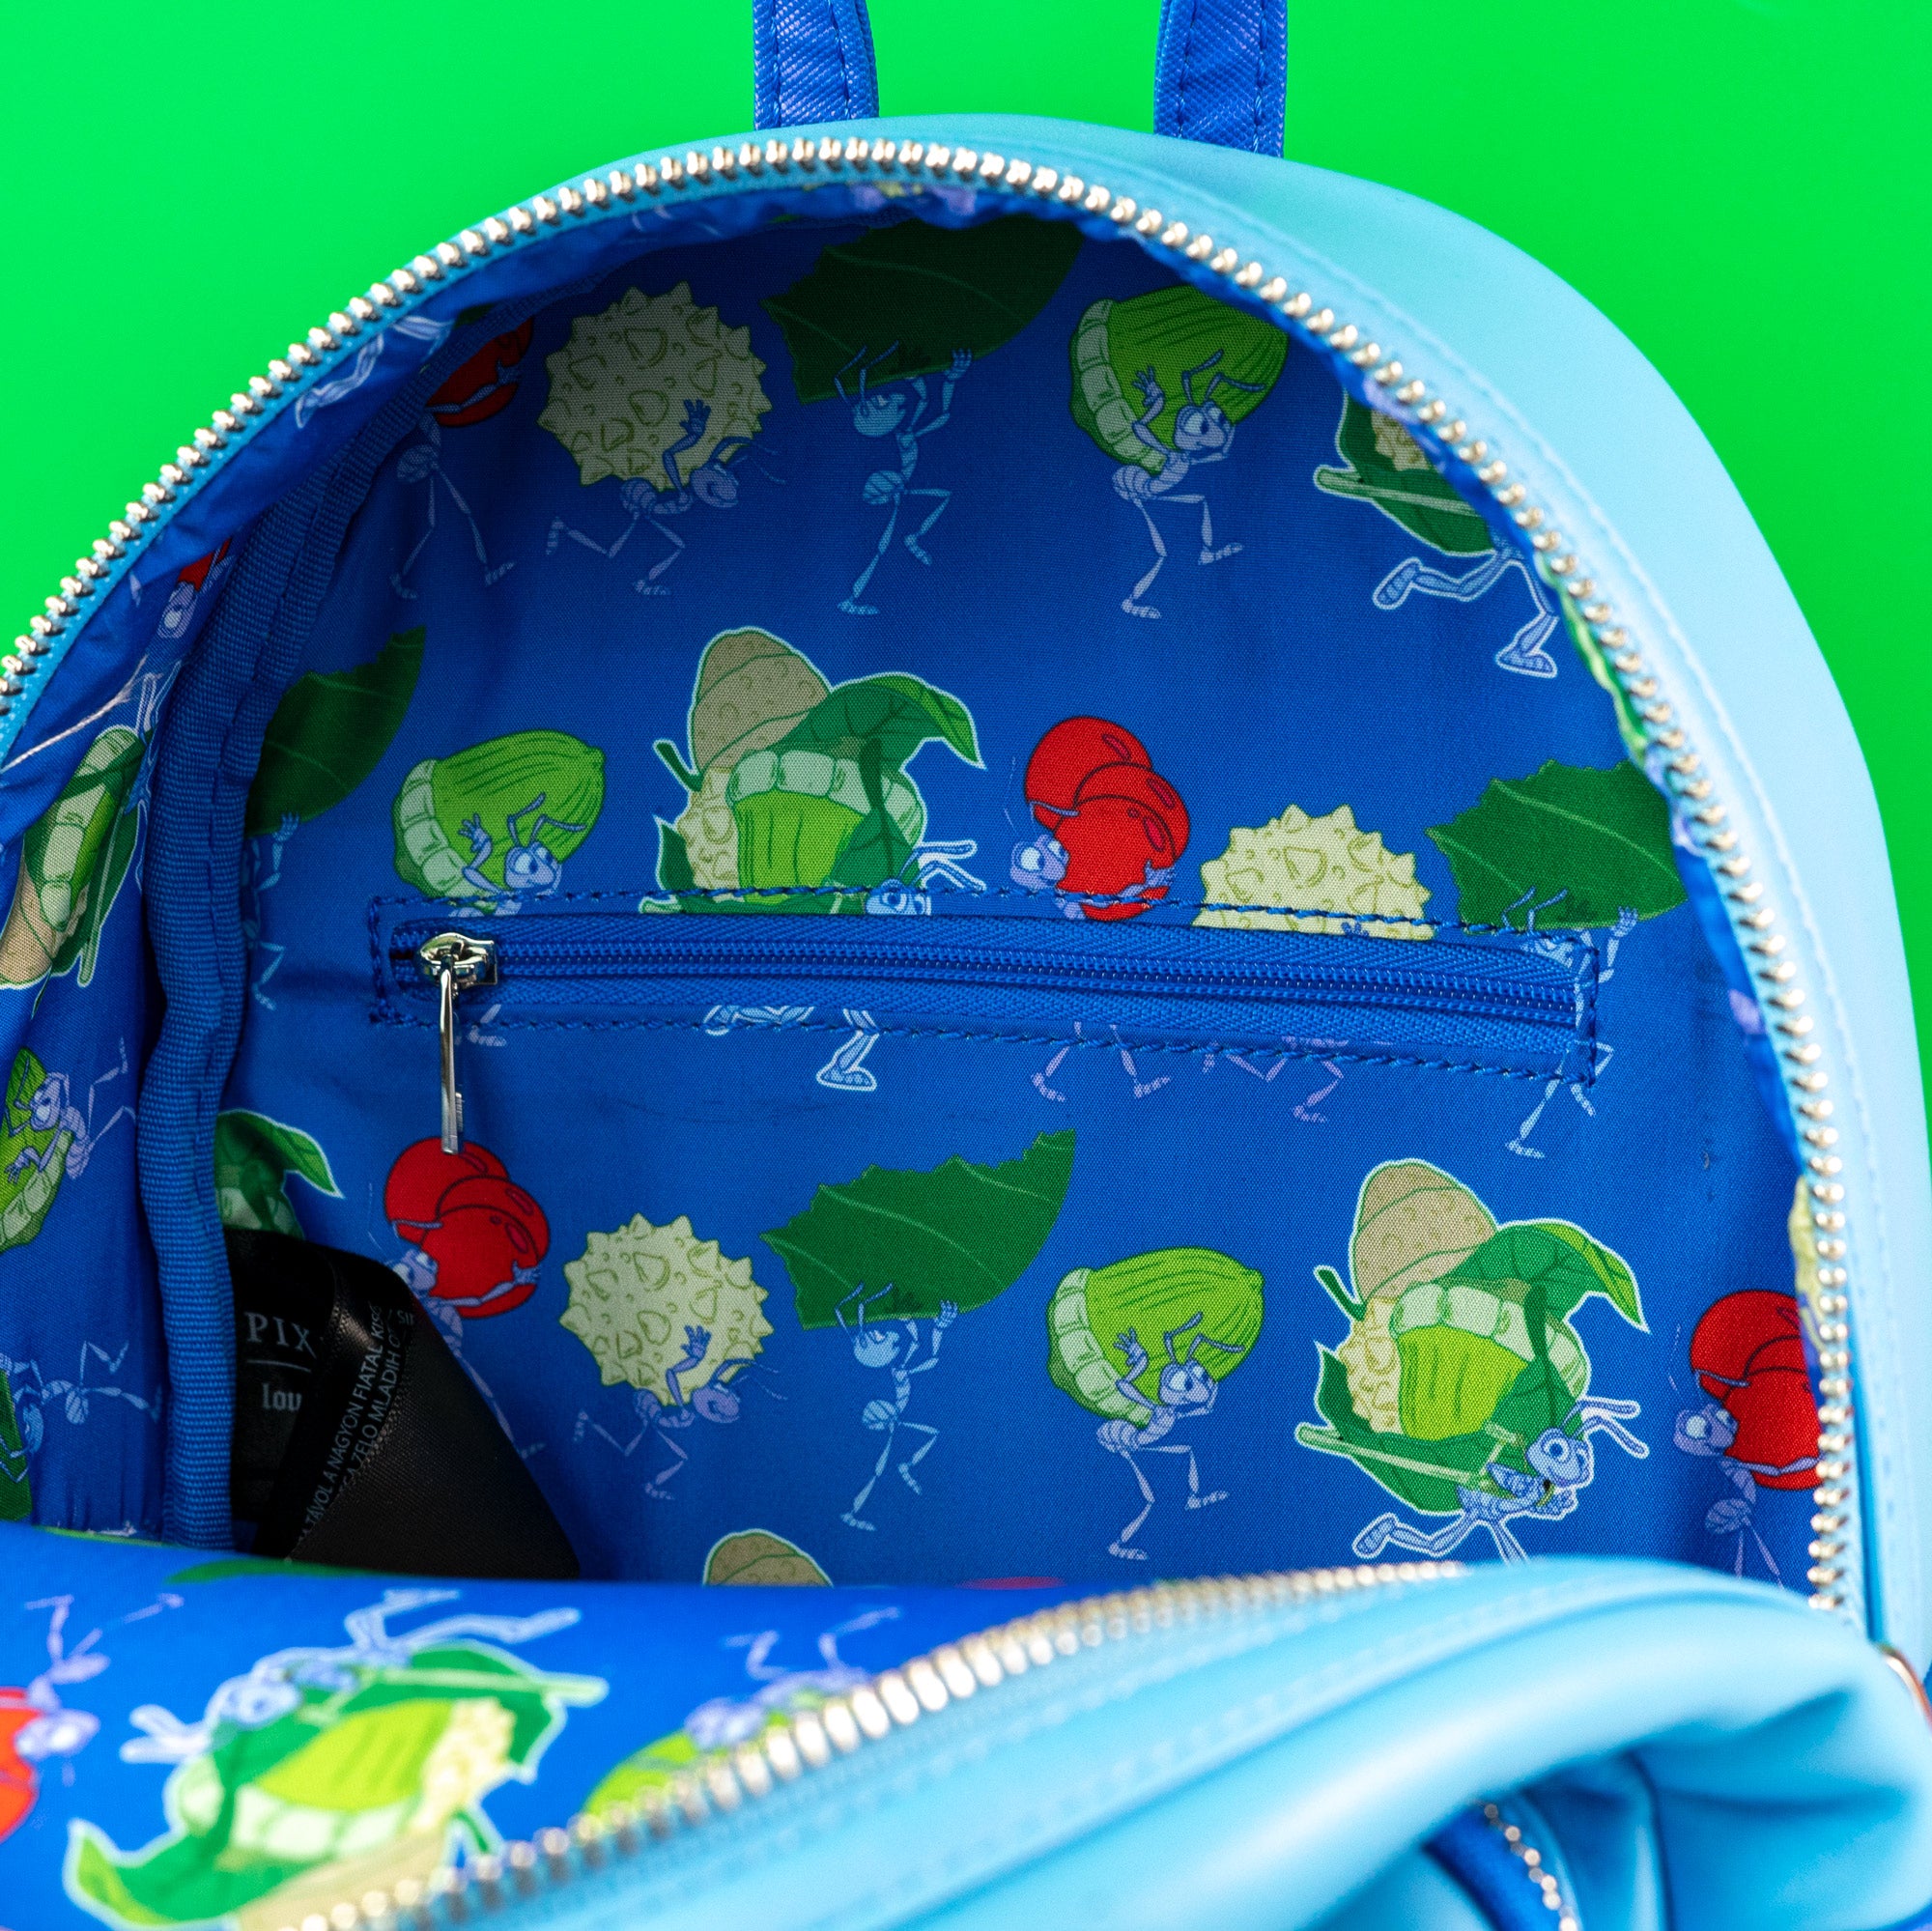 Loungefly x Disney Pixar A Bug's Life Flik Cosplay Mini Backpack